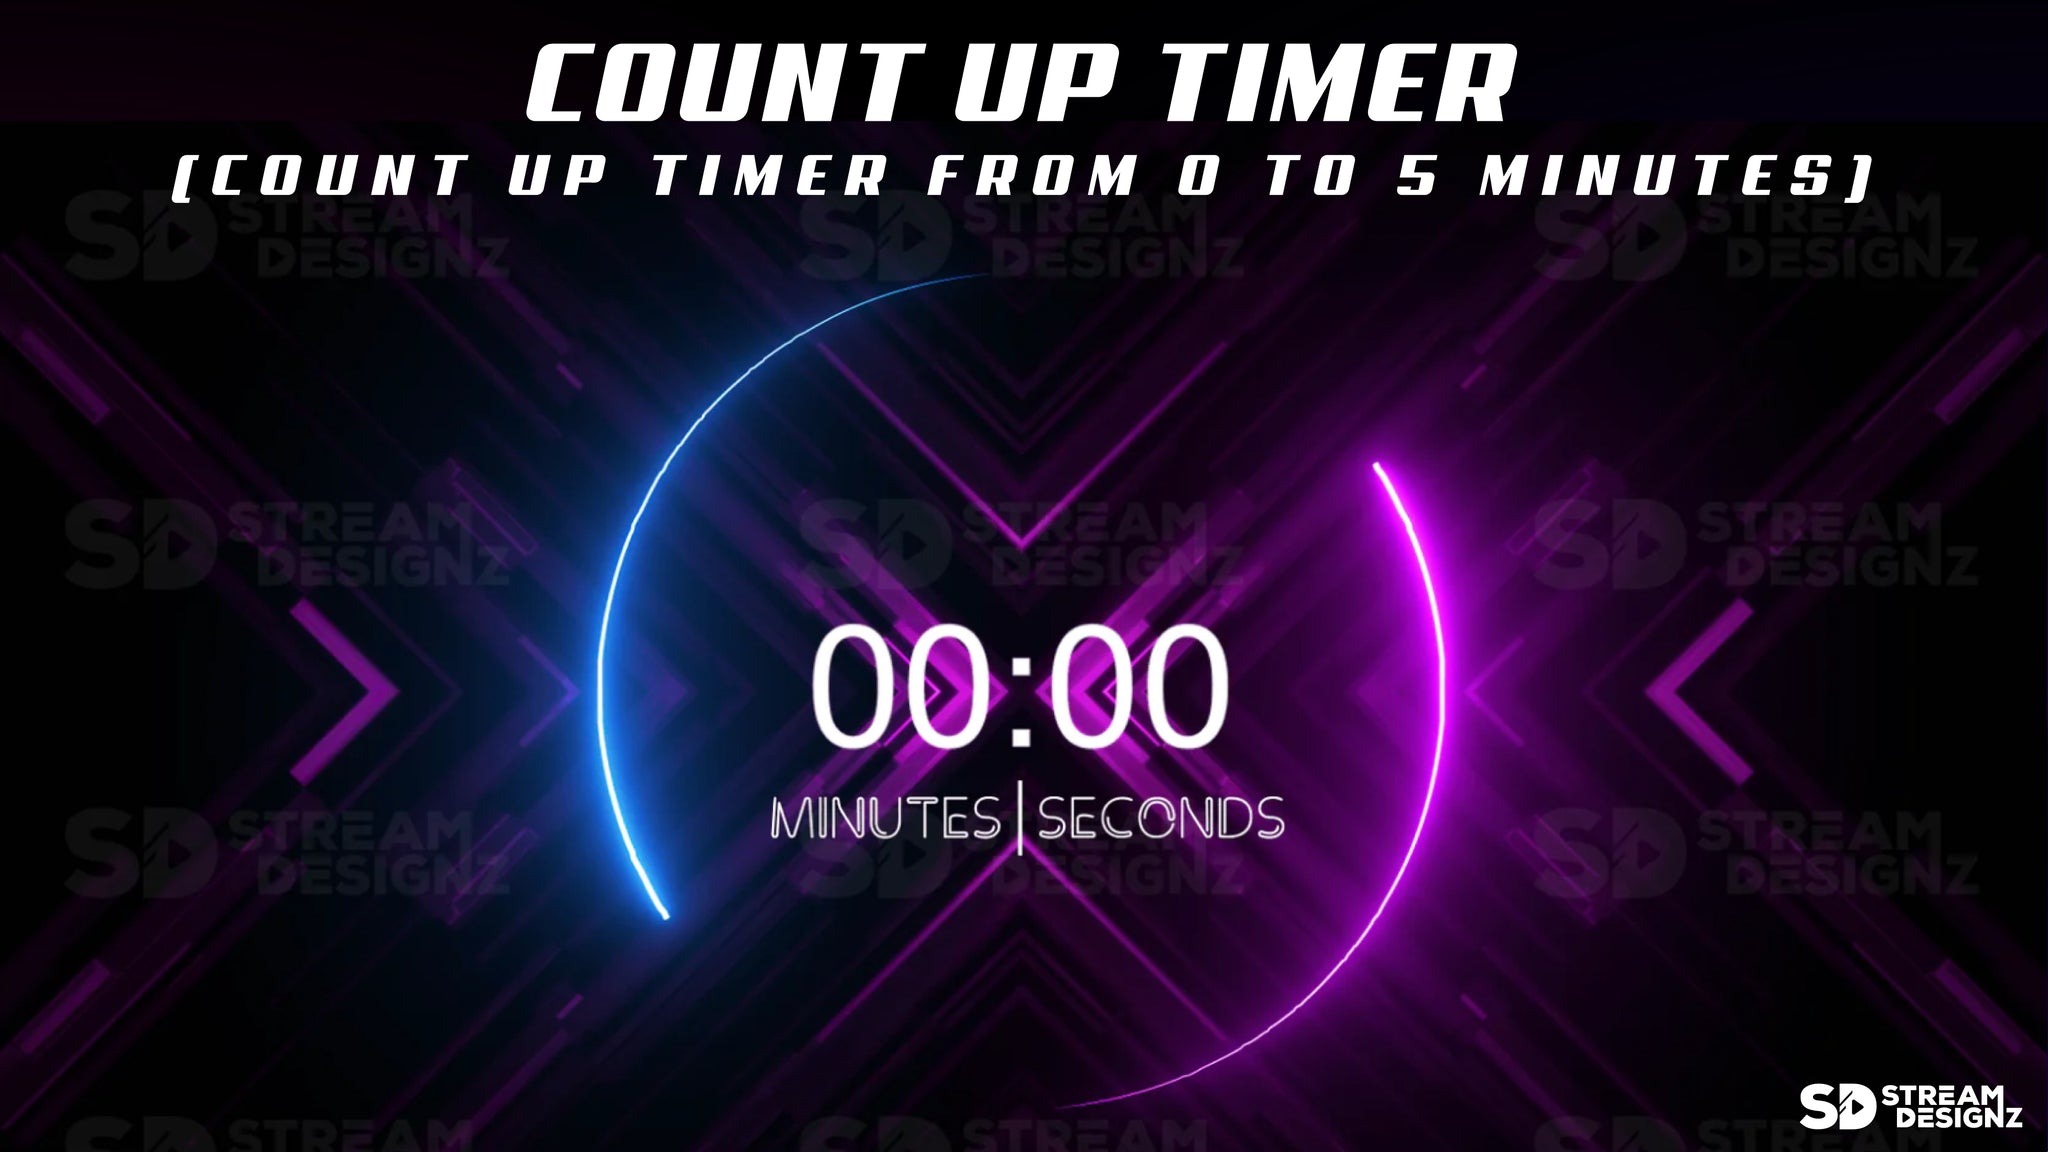 ultimate stream bundle illuminate count up timer stream designz